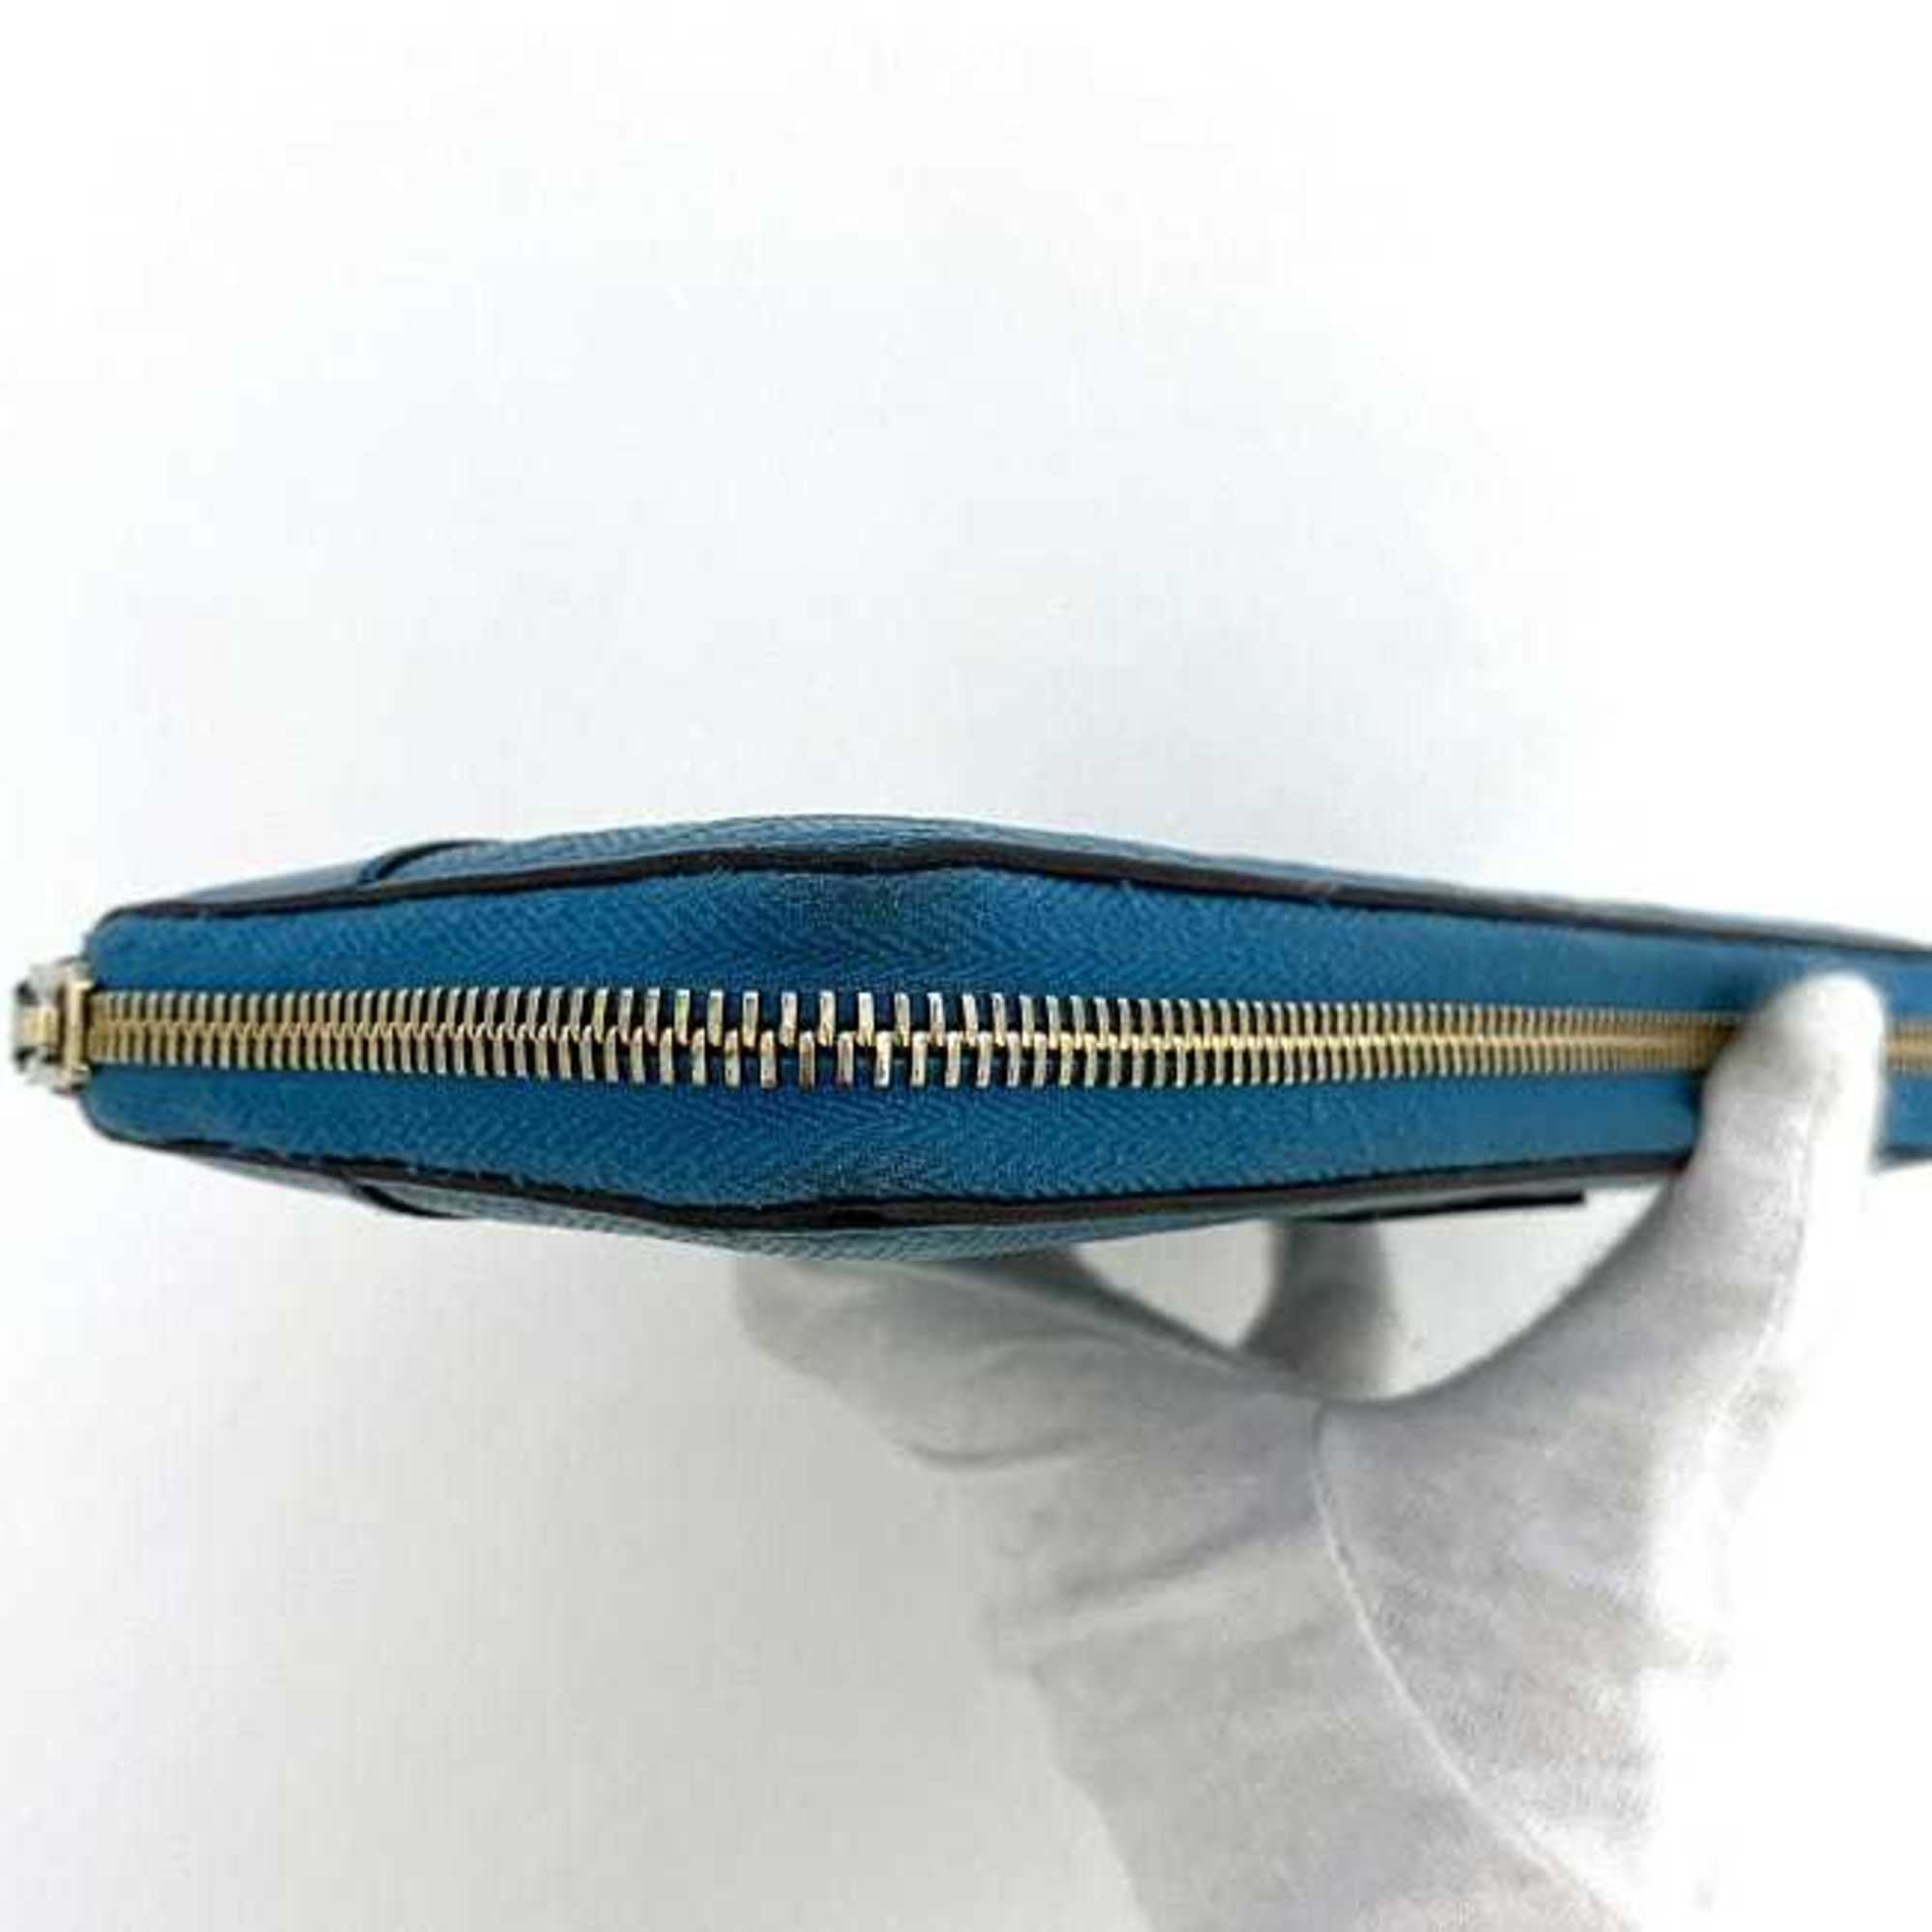 Gucci Round Long Wallet Blue Diamante 354487 ec-20594 Leather GUCCI Women's